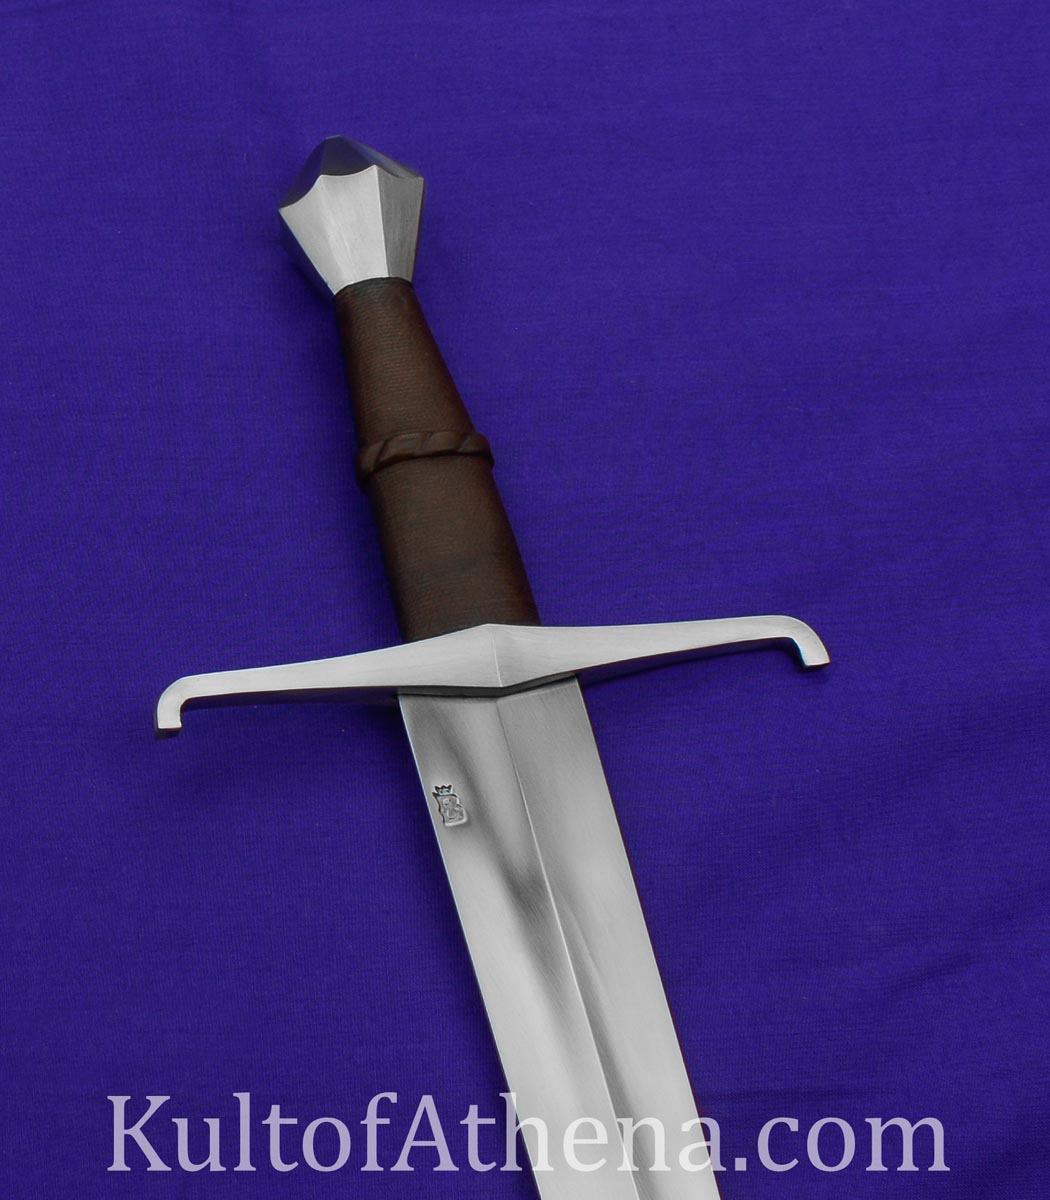 Balaur Arms - 15th Century Italian Sword-Hilt Dagger